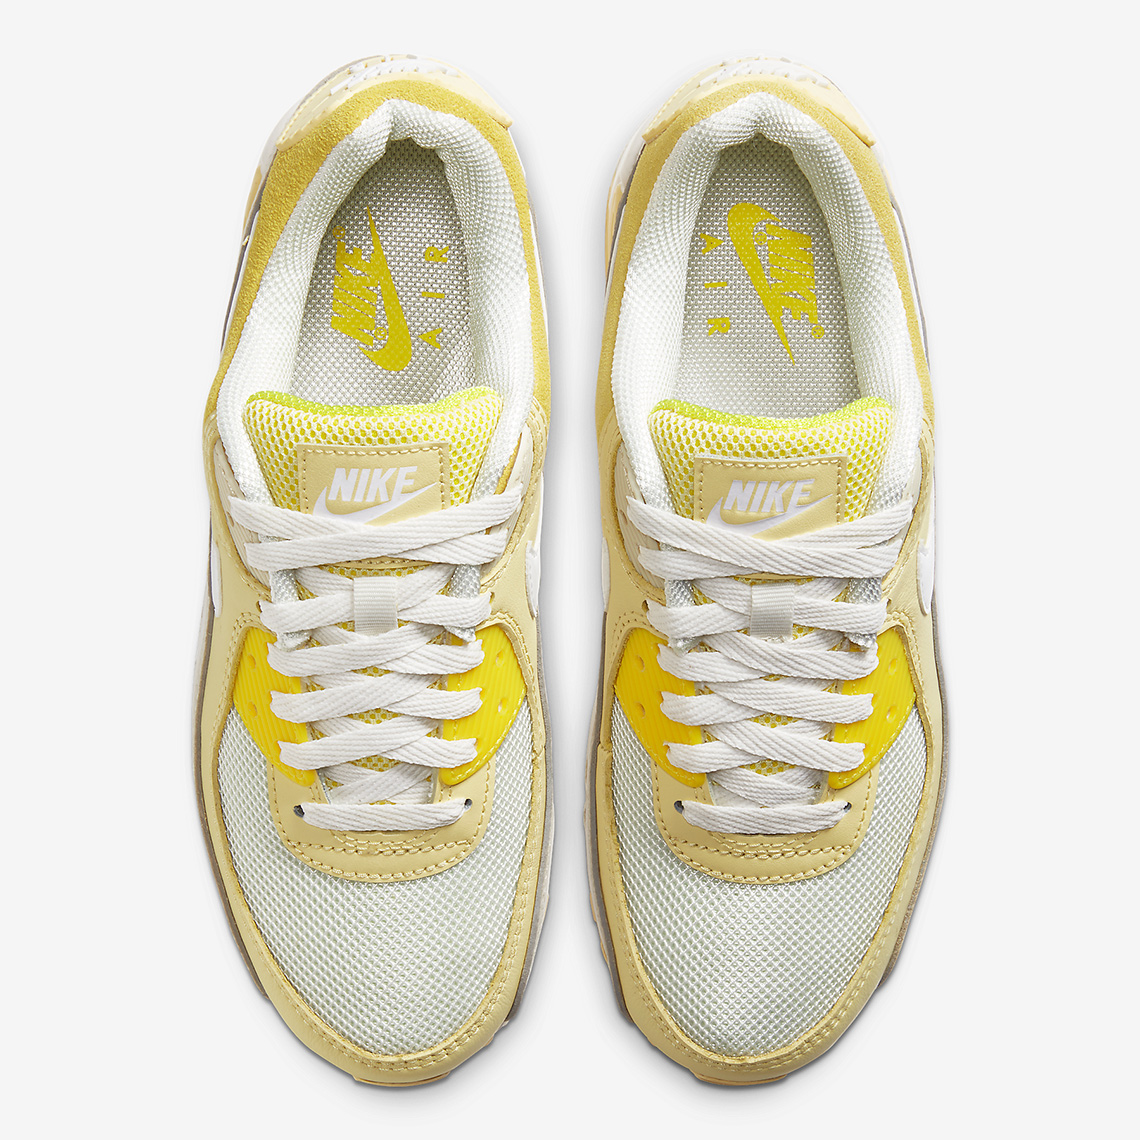 Nike Air Max 90 Lemon CW2654-700 Release Info | SneakerNews.com